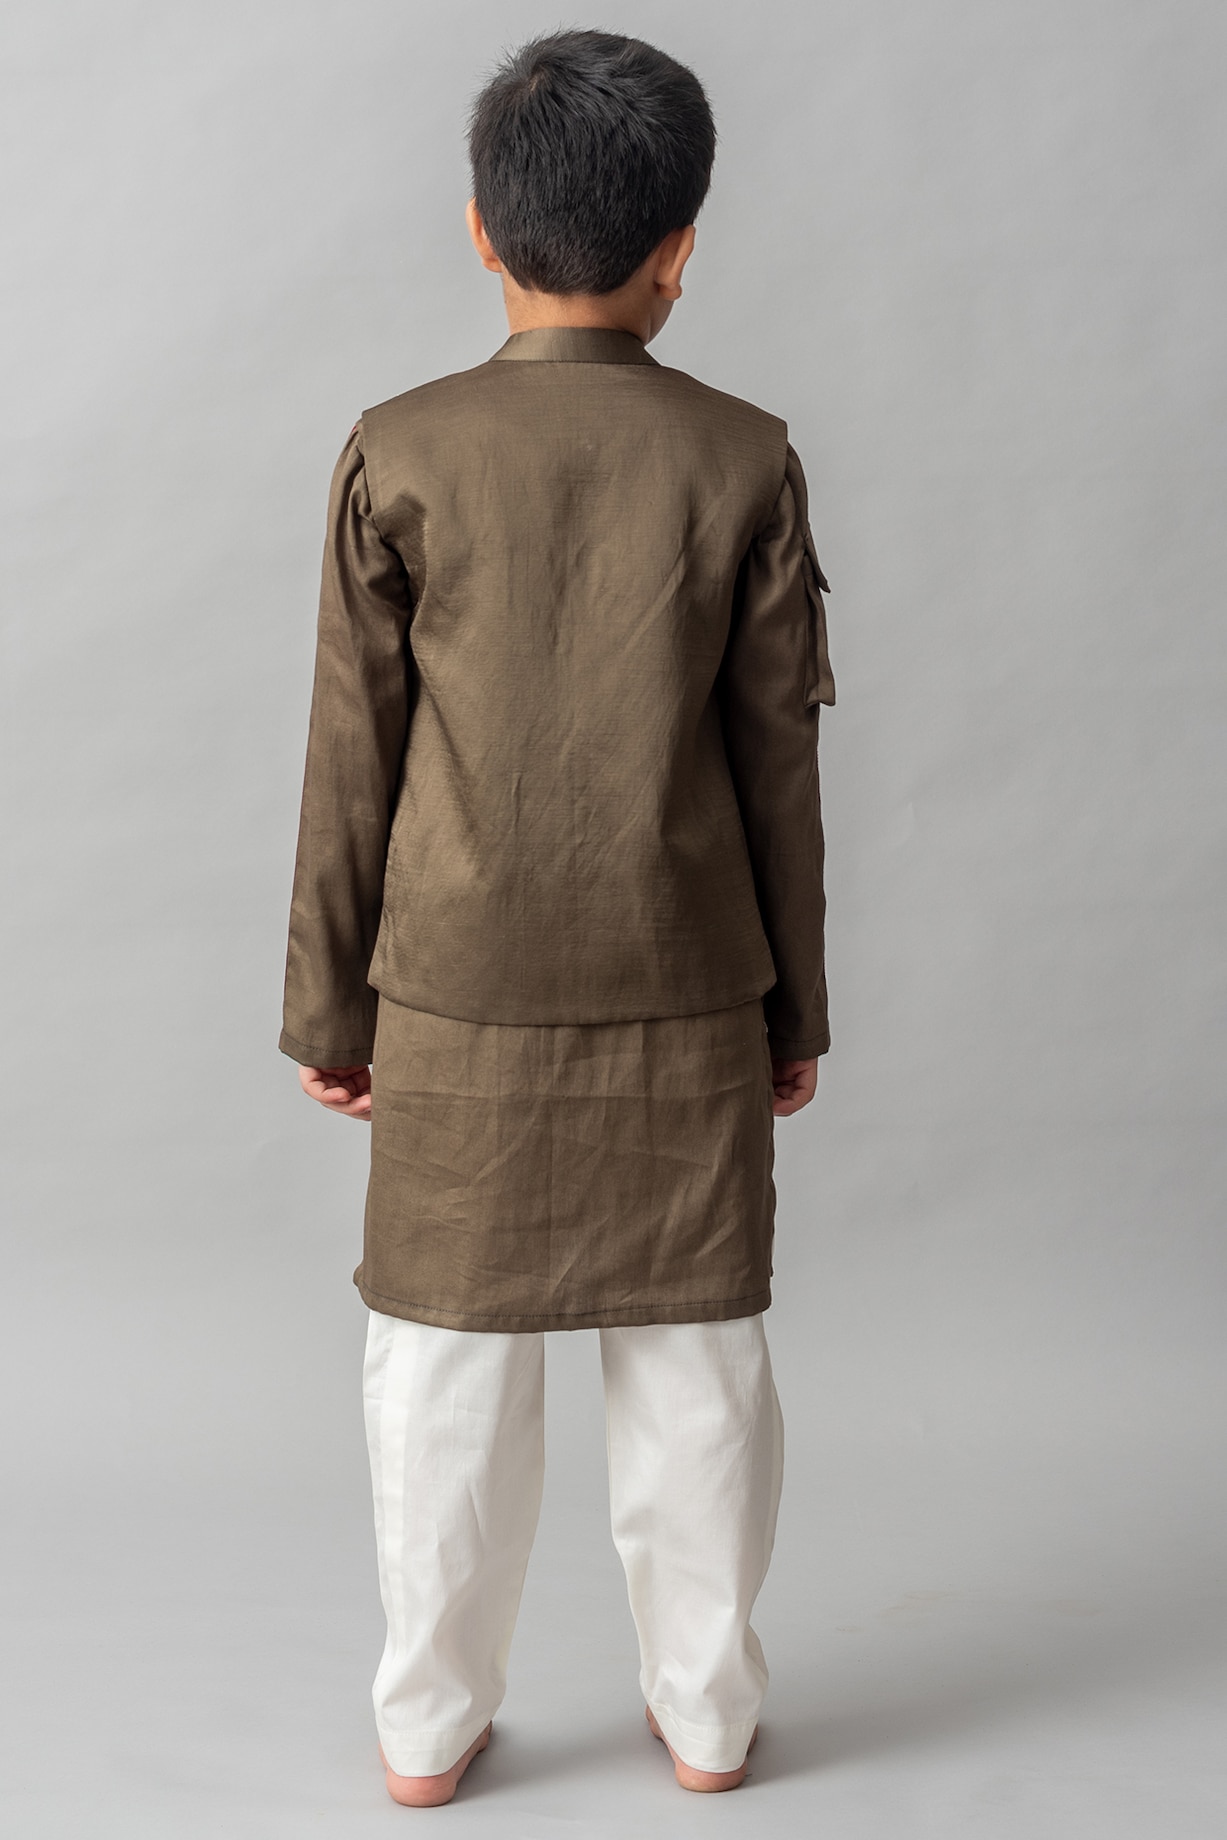 Buy Ba Ba Baby clothing co. Dark Green Embroidered Bundi Jacket With Kurta  Set For Boys at Pernia'sPopUpShopMen 2023